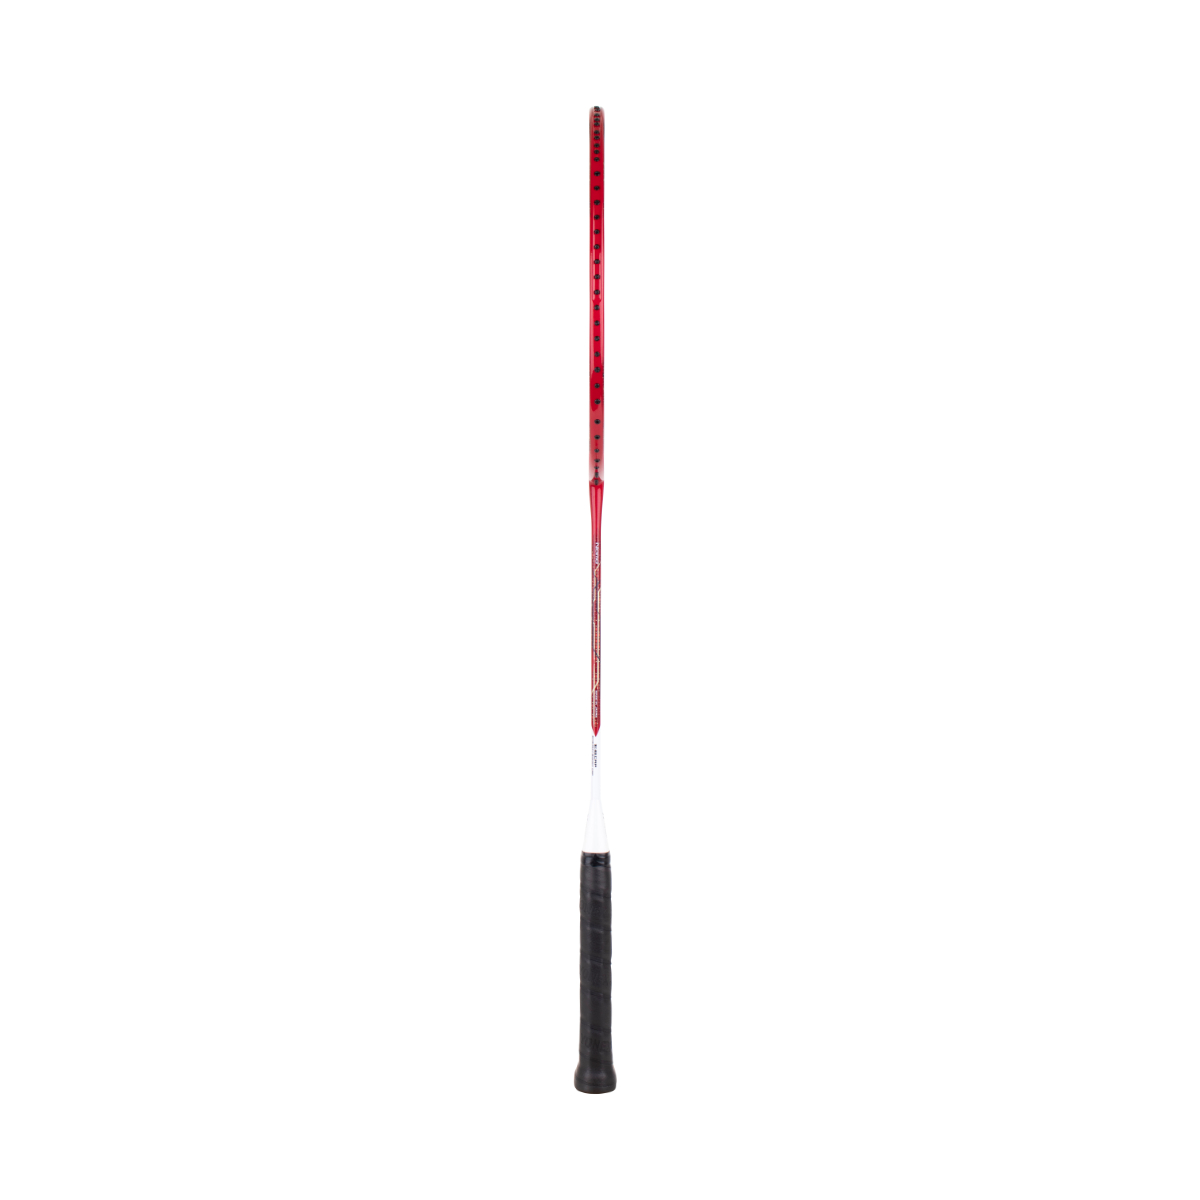 Badmintonschläger - YONEX - ASTROX 88DDetailbild2